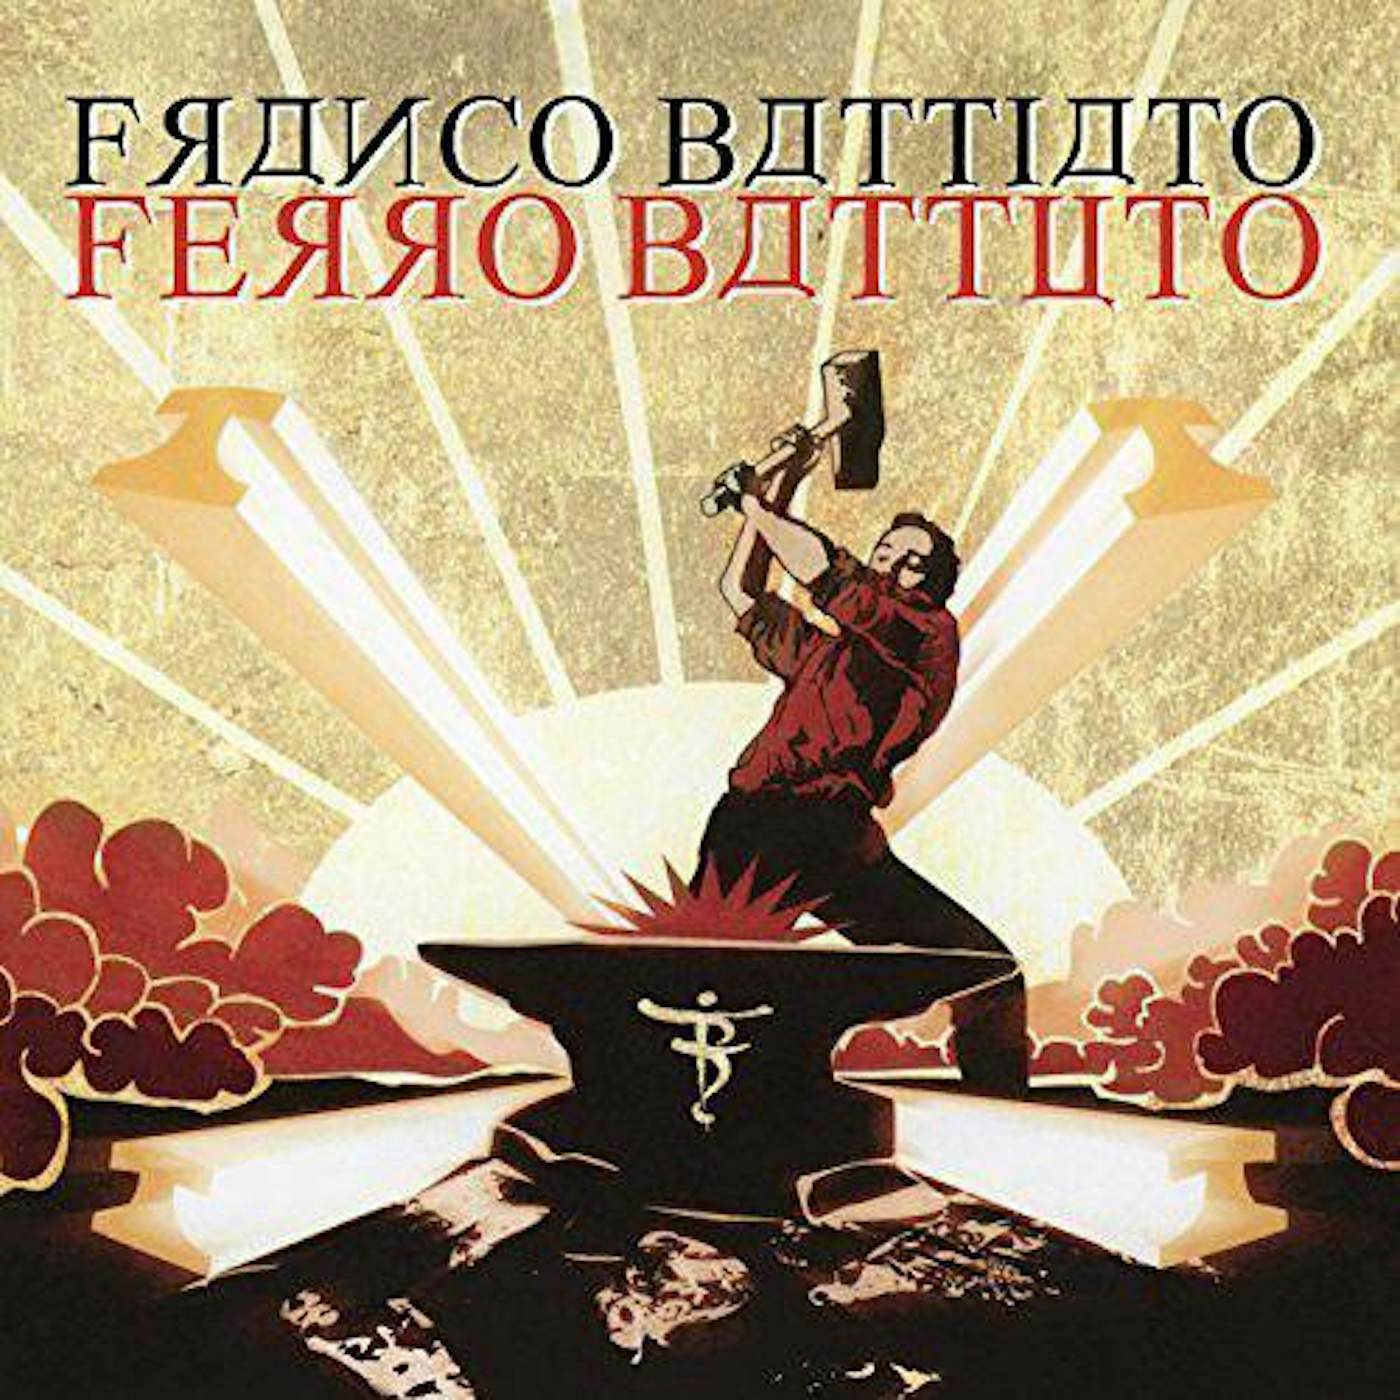 Franco Battiato Hierro Forjado (Limited Yellow Colored) Vinyl Record